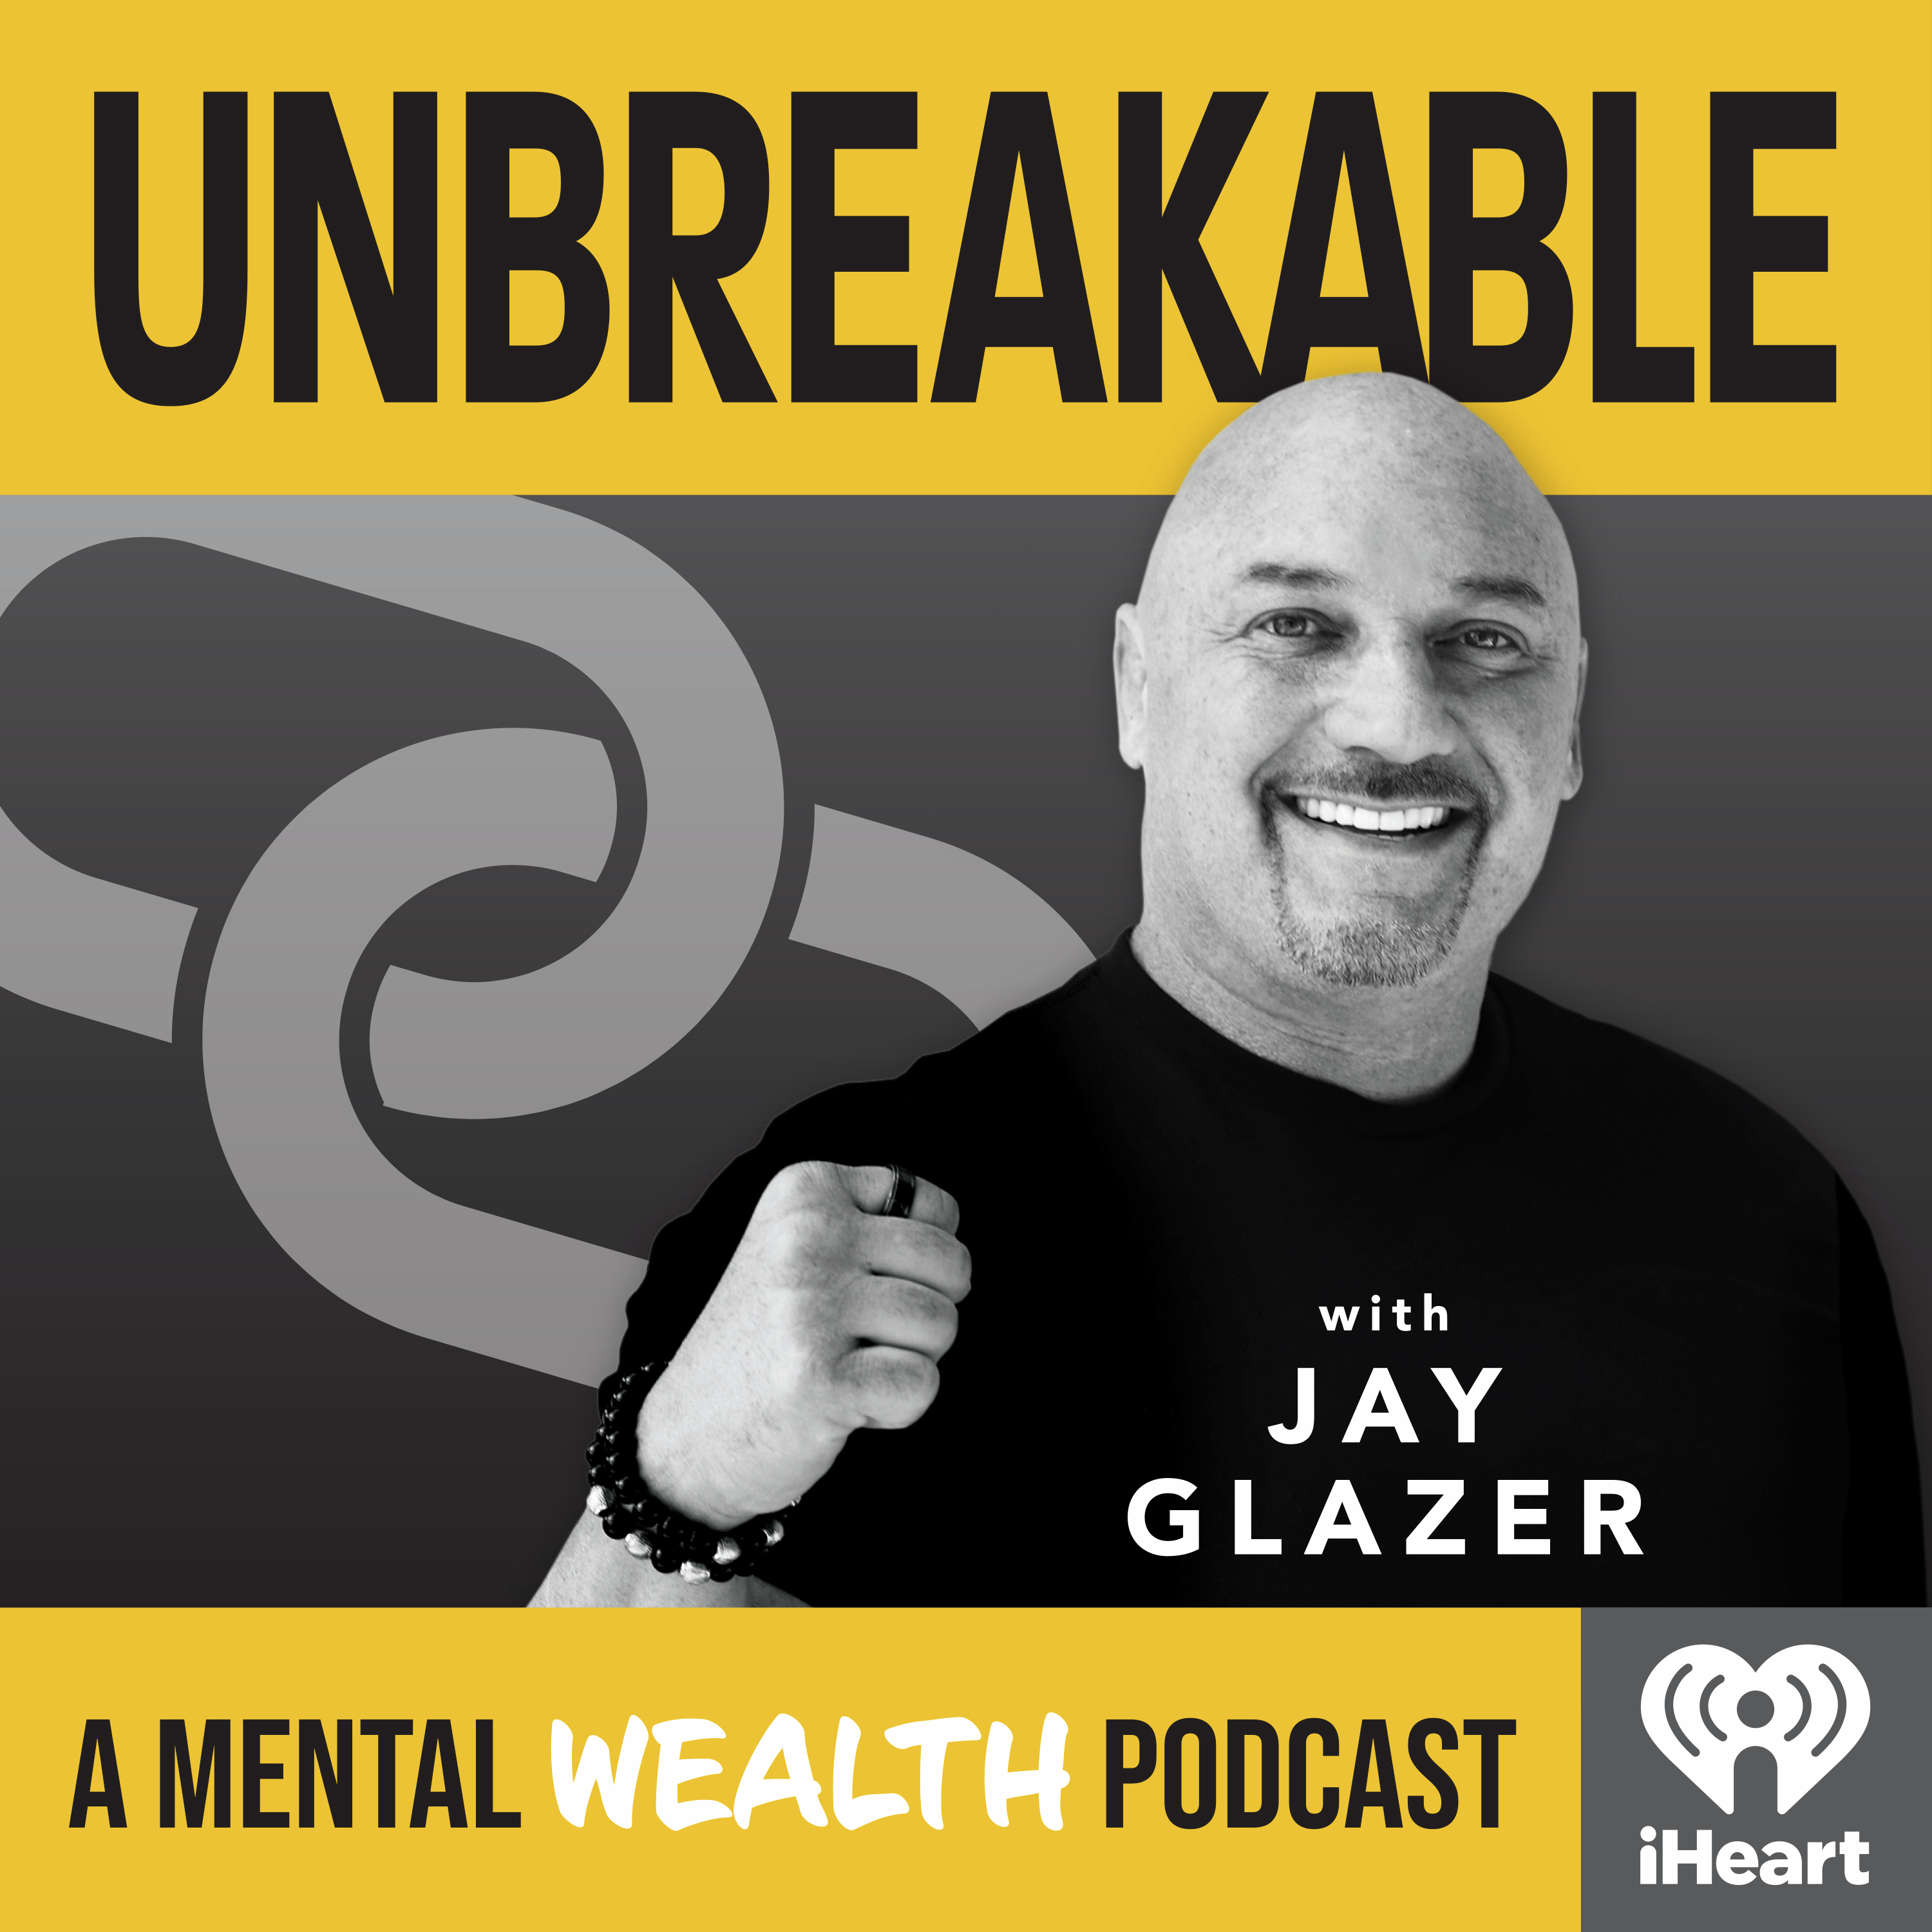 Unbreakable Episode 35 - Lindsey Vonn